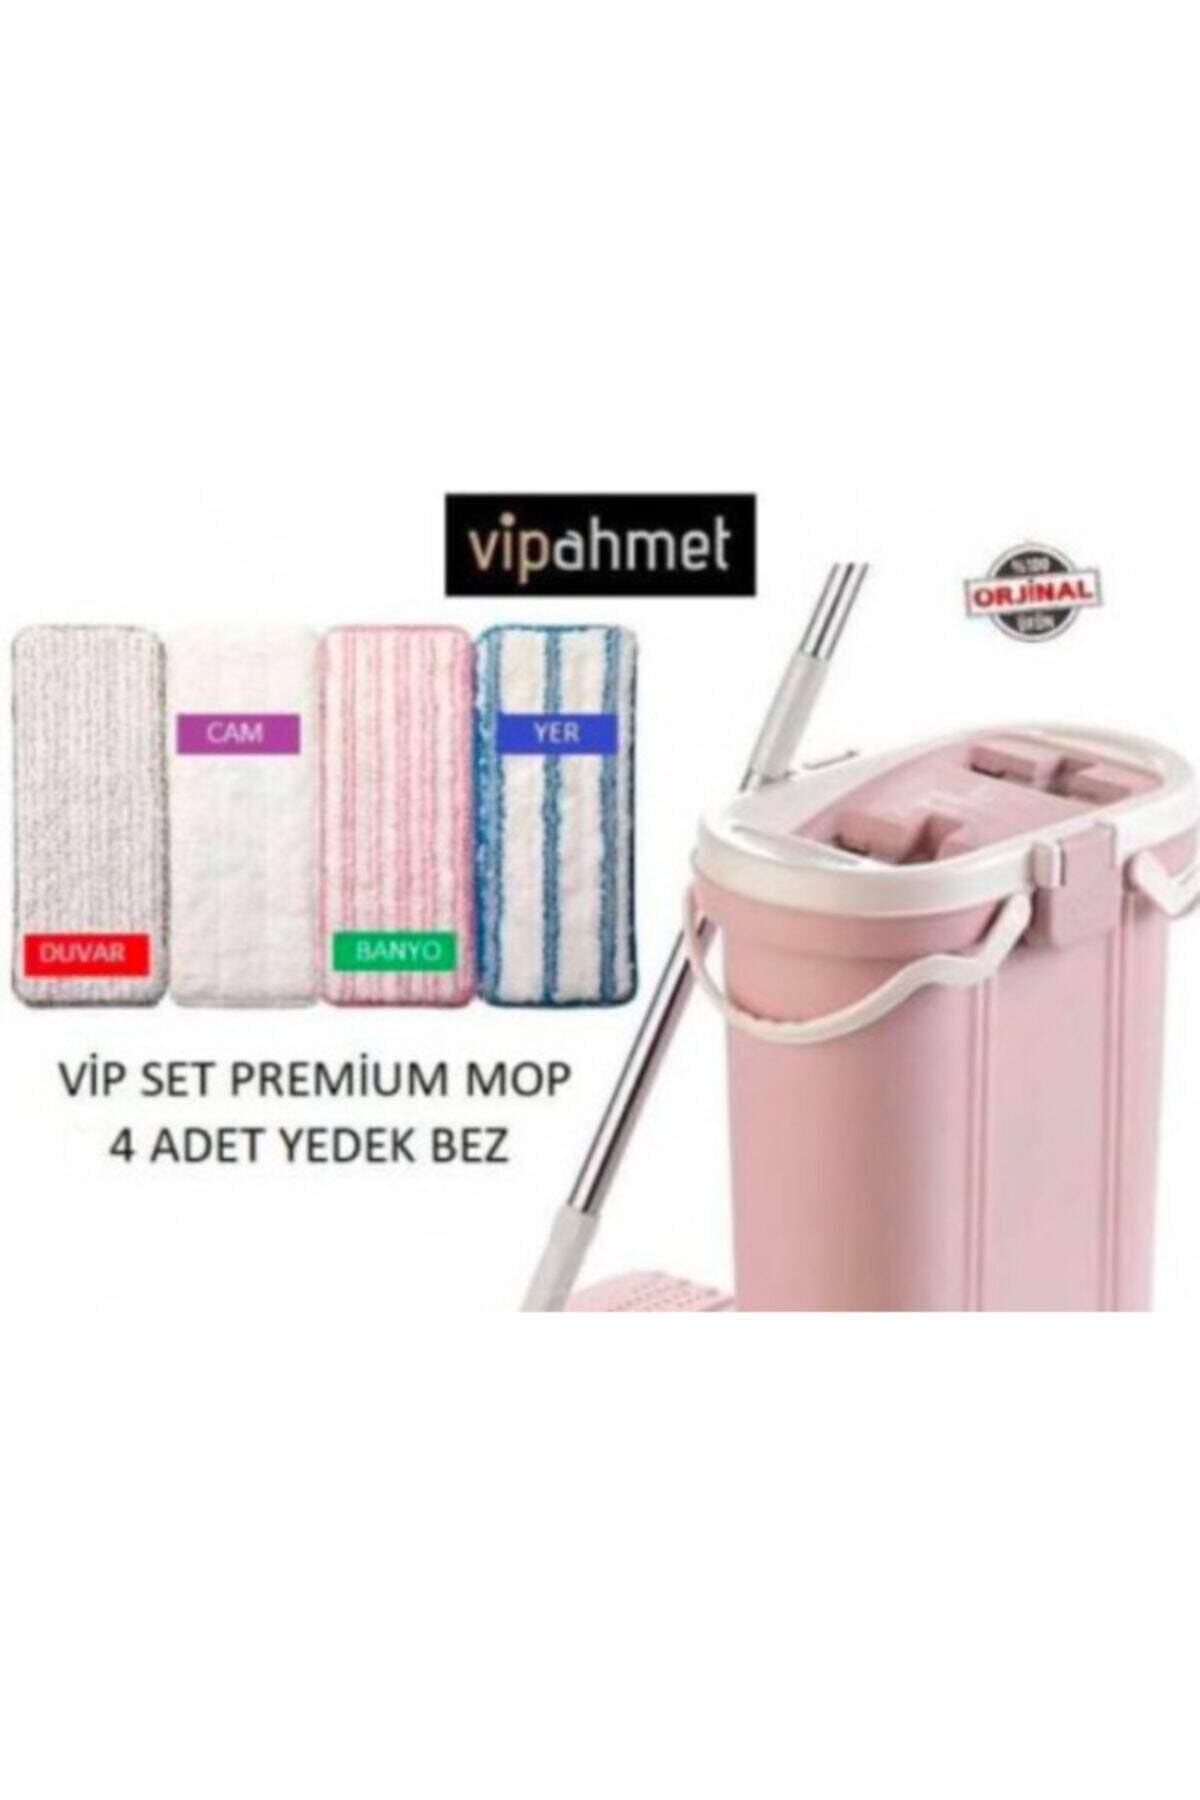 Vip Ahmet Premium Mop + 4 Adet Yedek Bez Kampanya